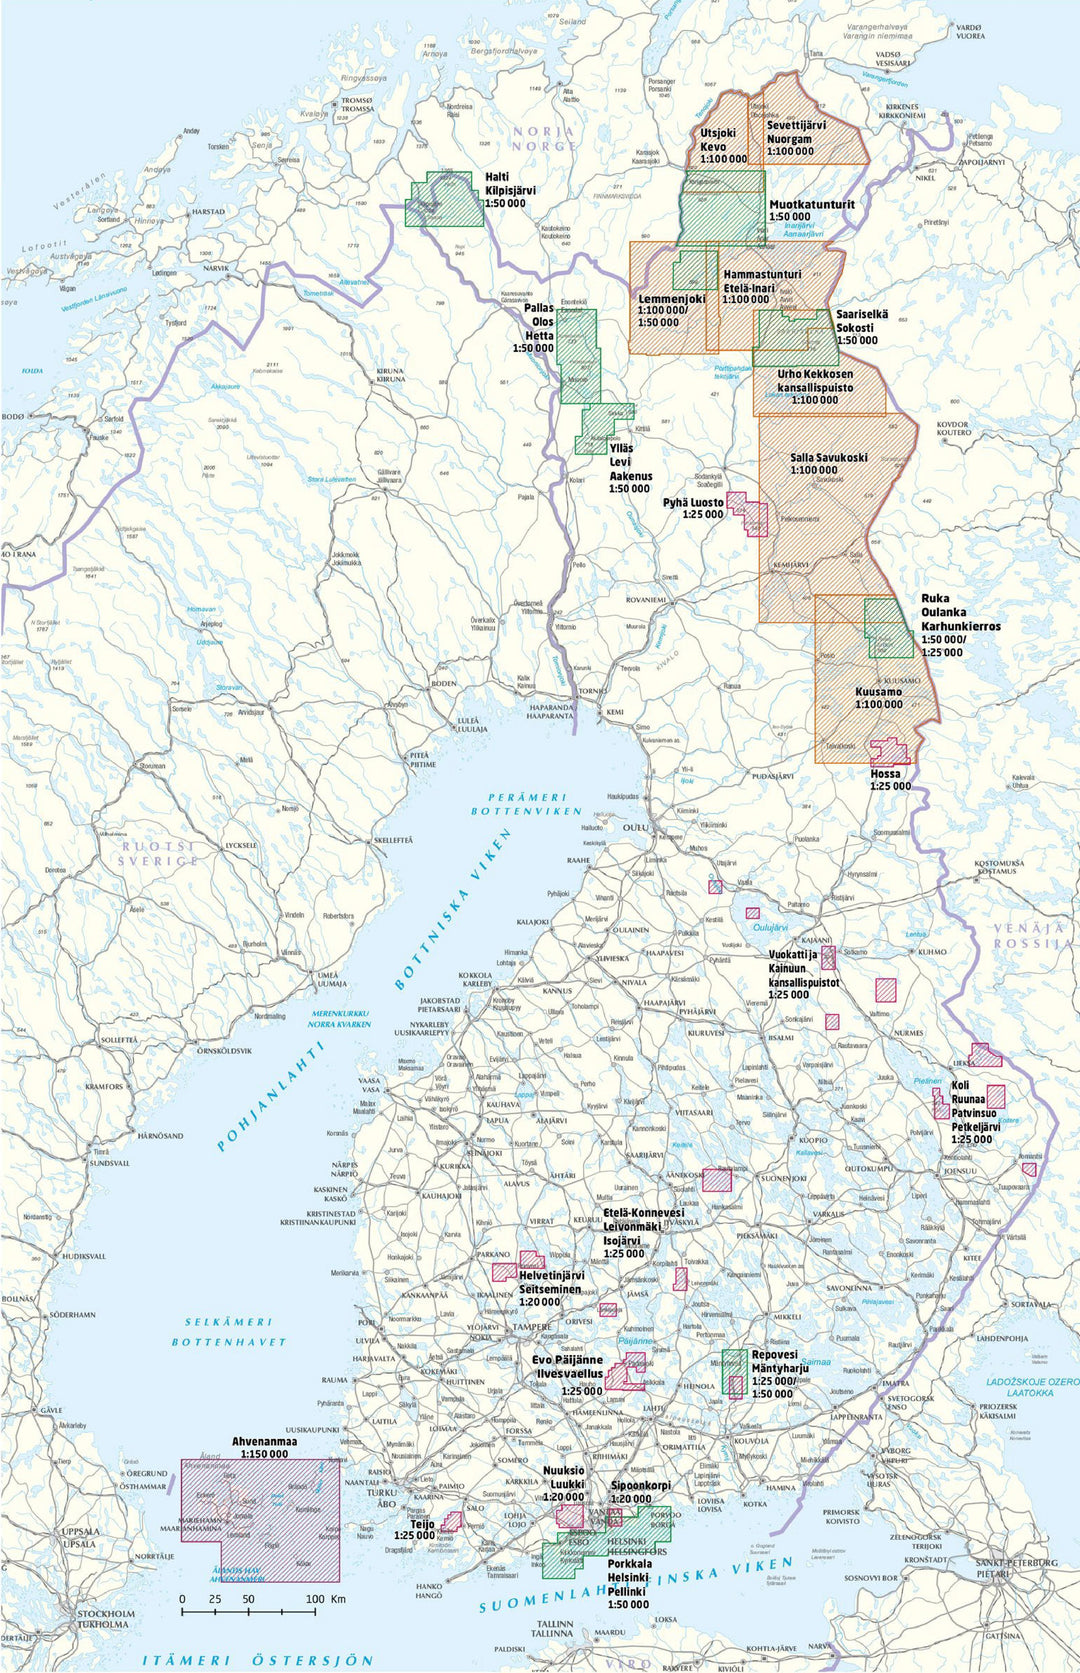 Carte de plein air n° 15 - Repovesi Mäntyharju (Finlande) | Karttakeskus carte pliée Karttakeskus 